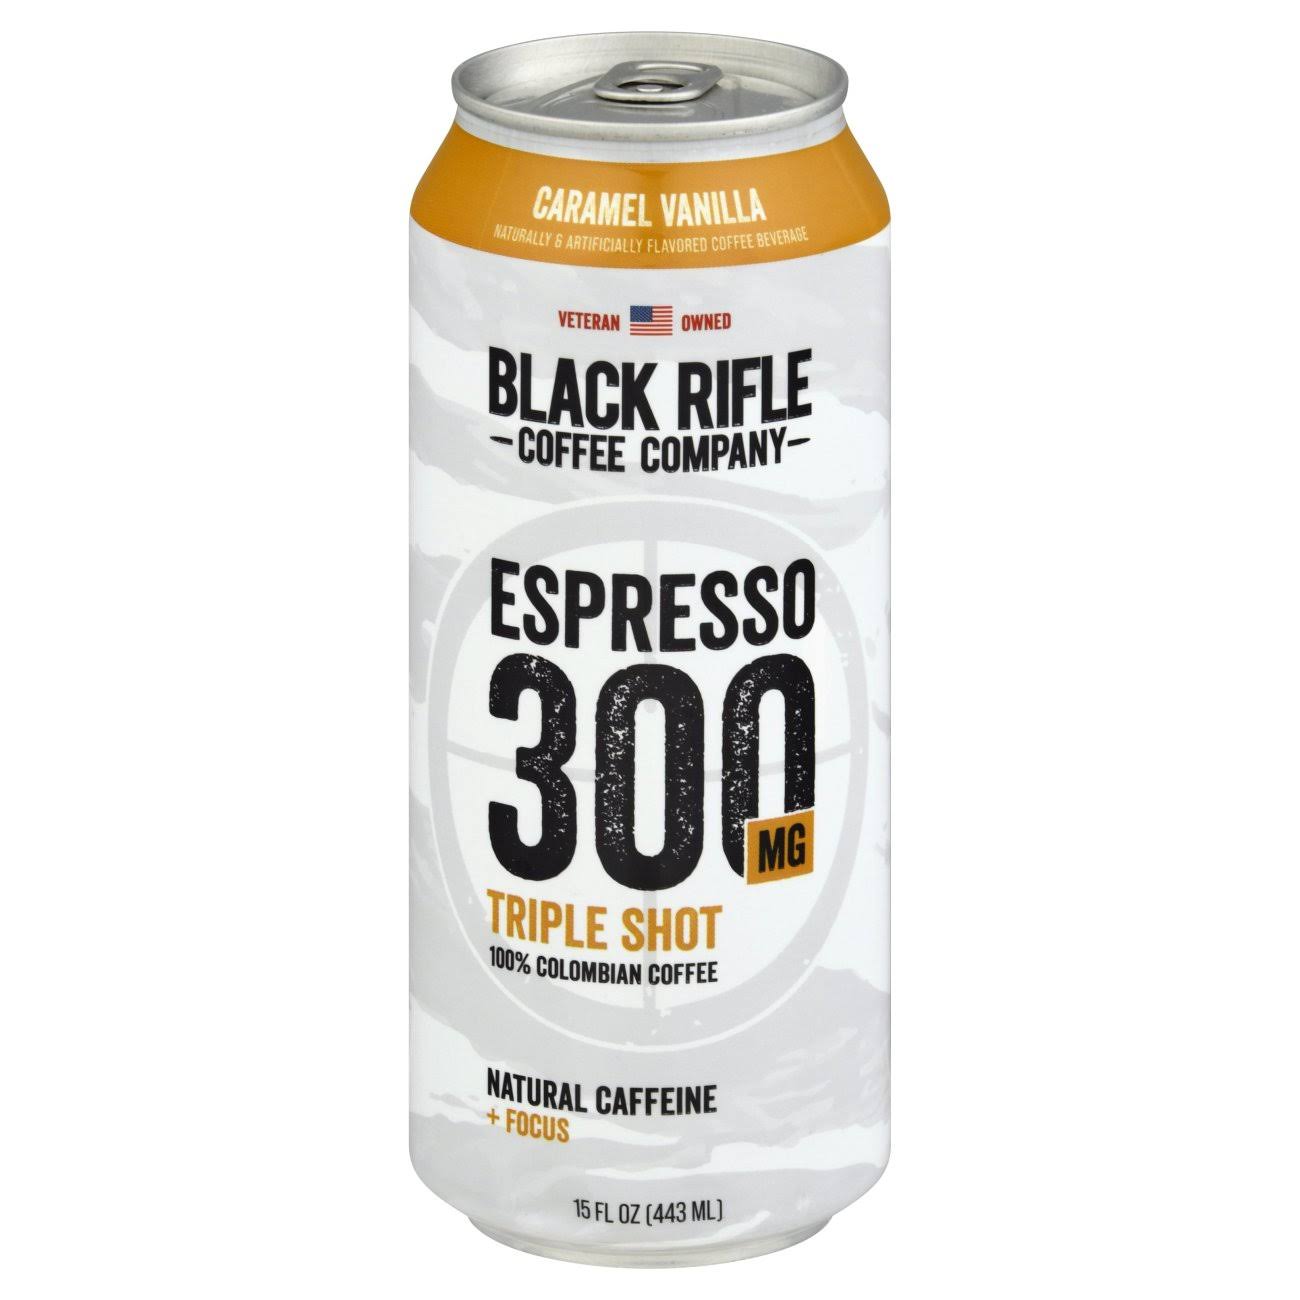 Black Rifle Coffee, 100% Columbian, Espresso 300 mg, Caramel Vanilla, Triple Shot - 15 fl oz